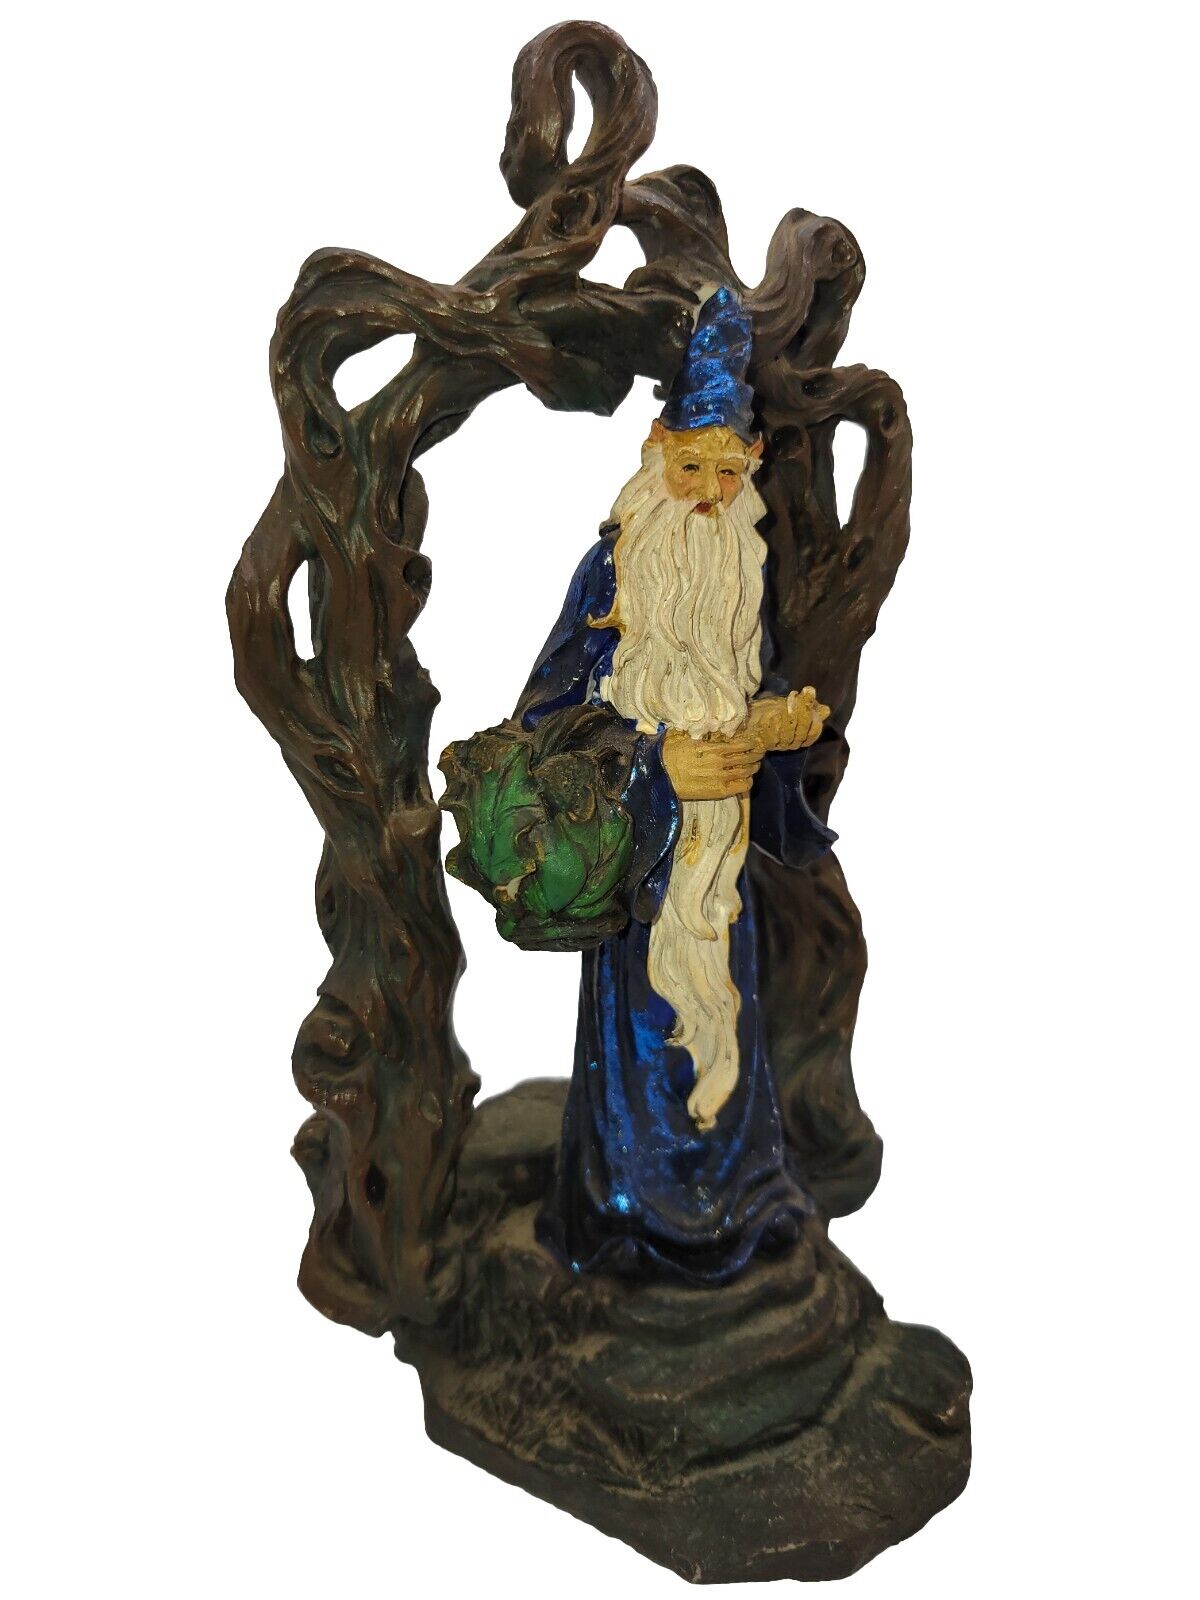 1950s Handpainted Vintage Merlin The Wizard Fantasy Sculpture